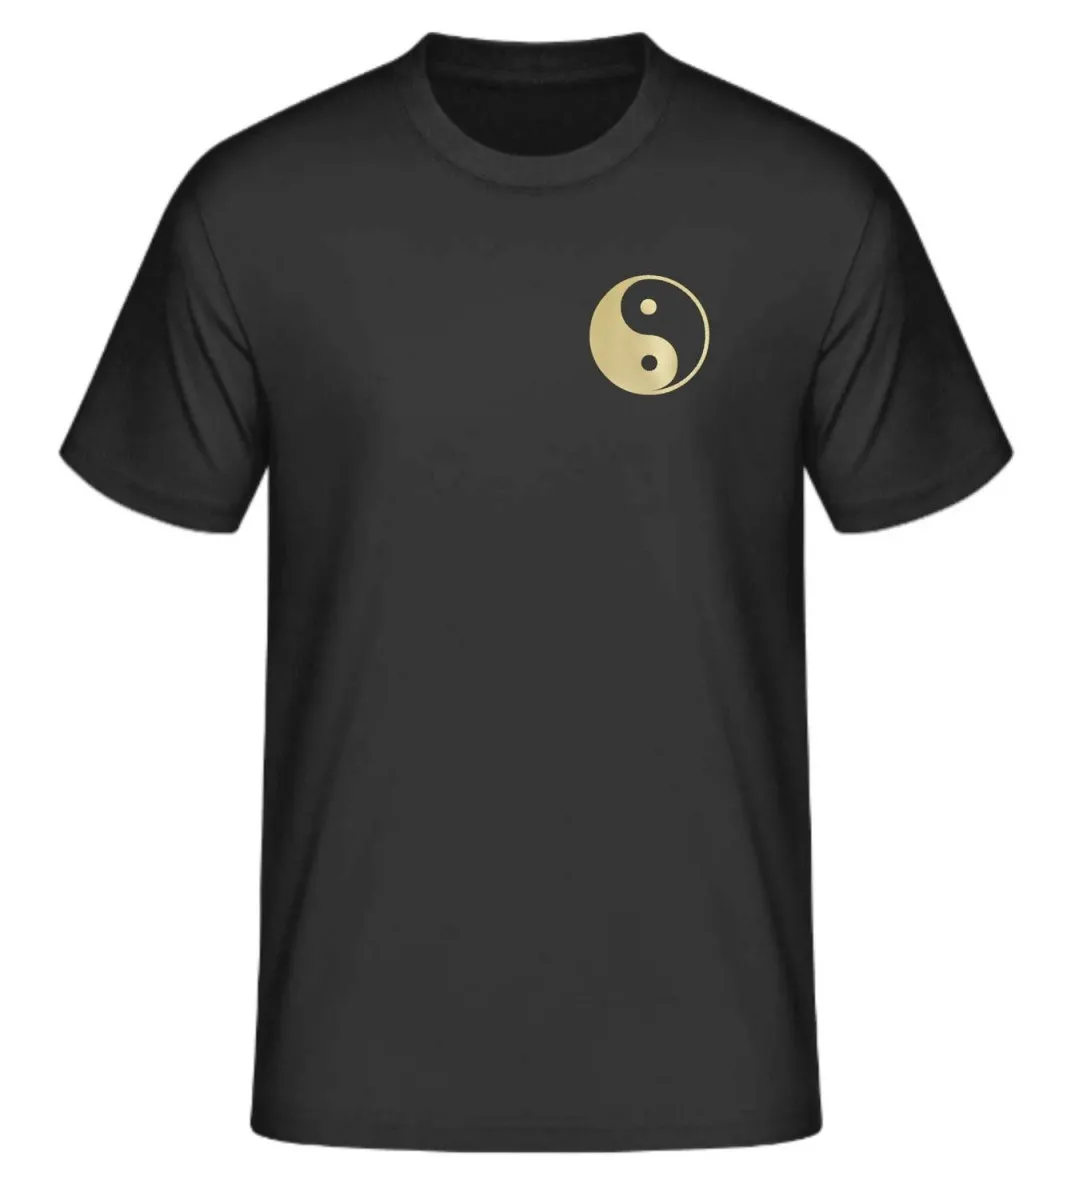 T-Shirt Ying Yang - Logo poitrine tai chi or